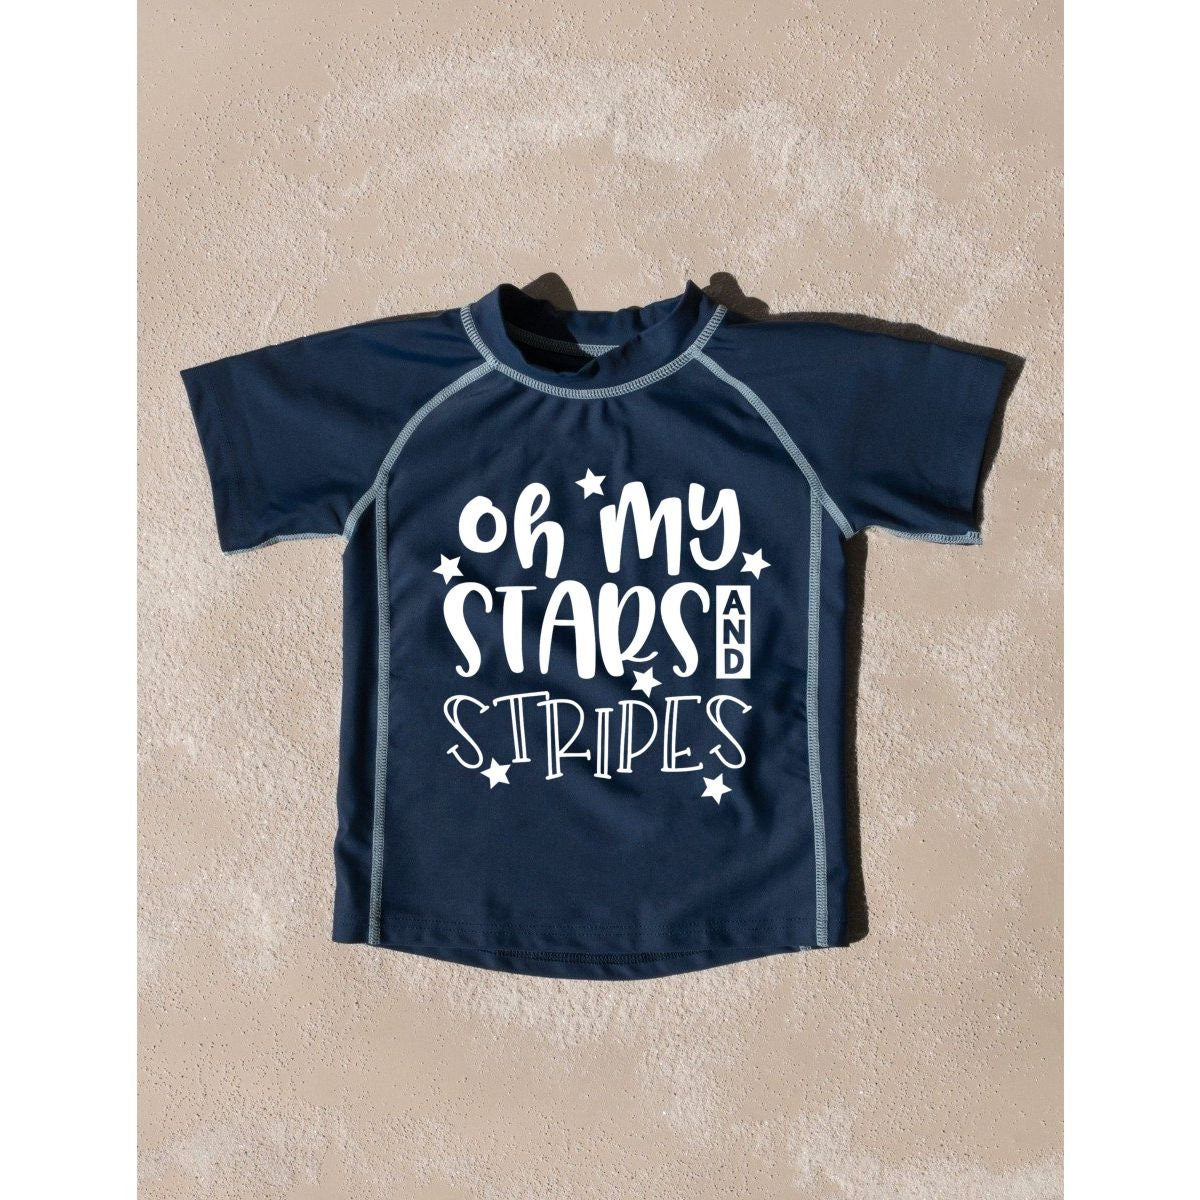 Oh My Stars and Stripes Toddler Rashguard Swimwear UV Protection +50 - Kids 4th of July Swimsuit - Toddler Girl Rash Guard